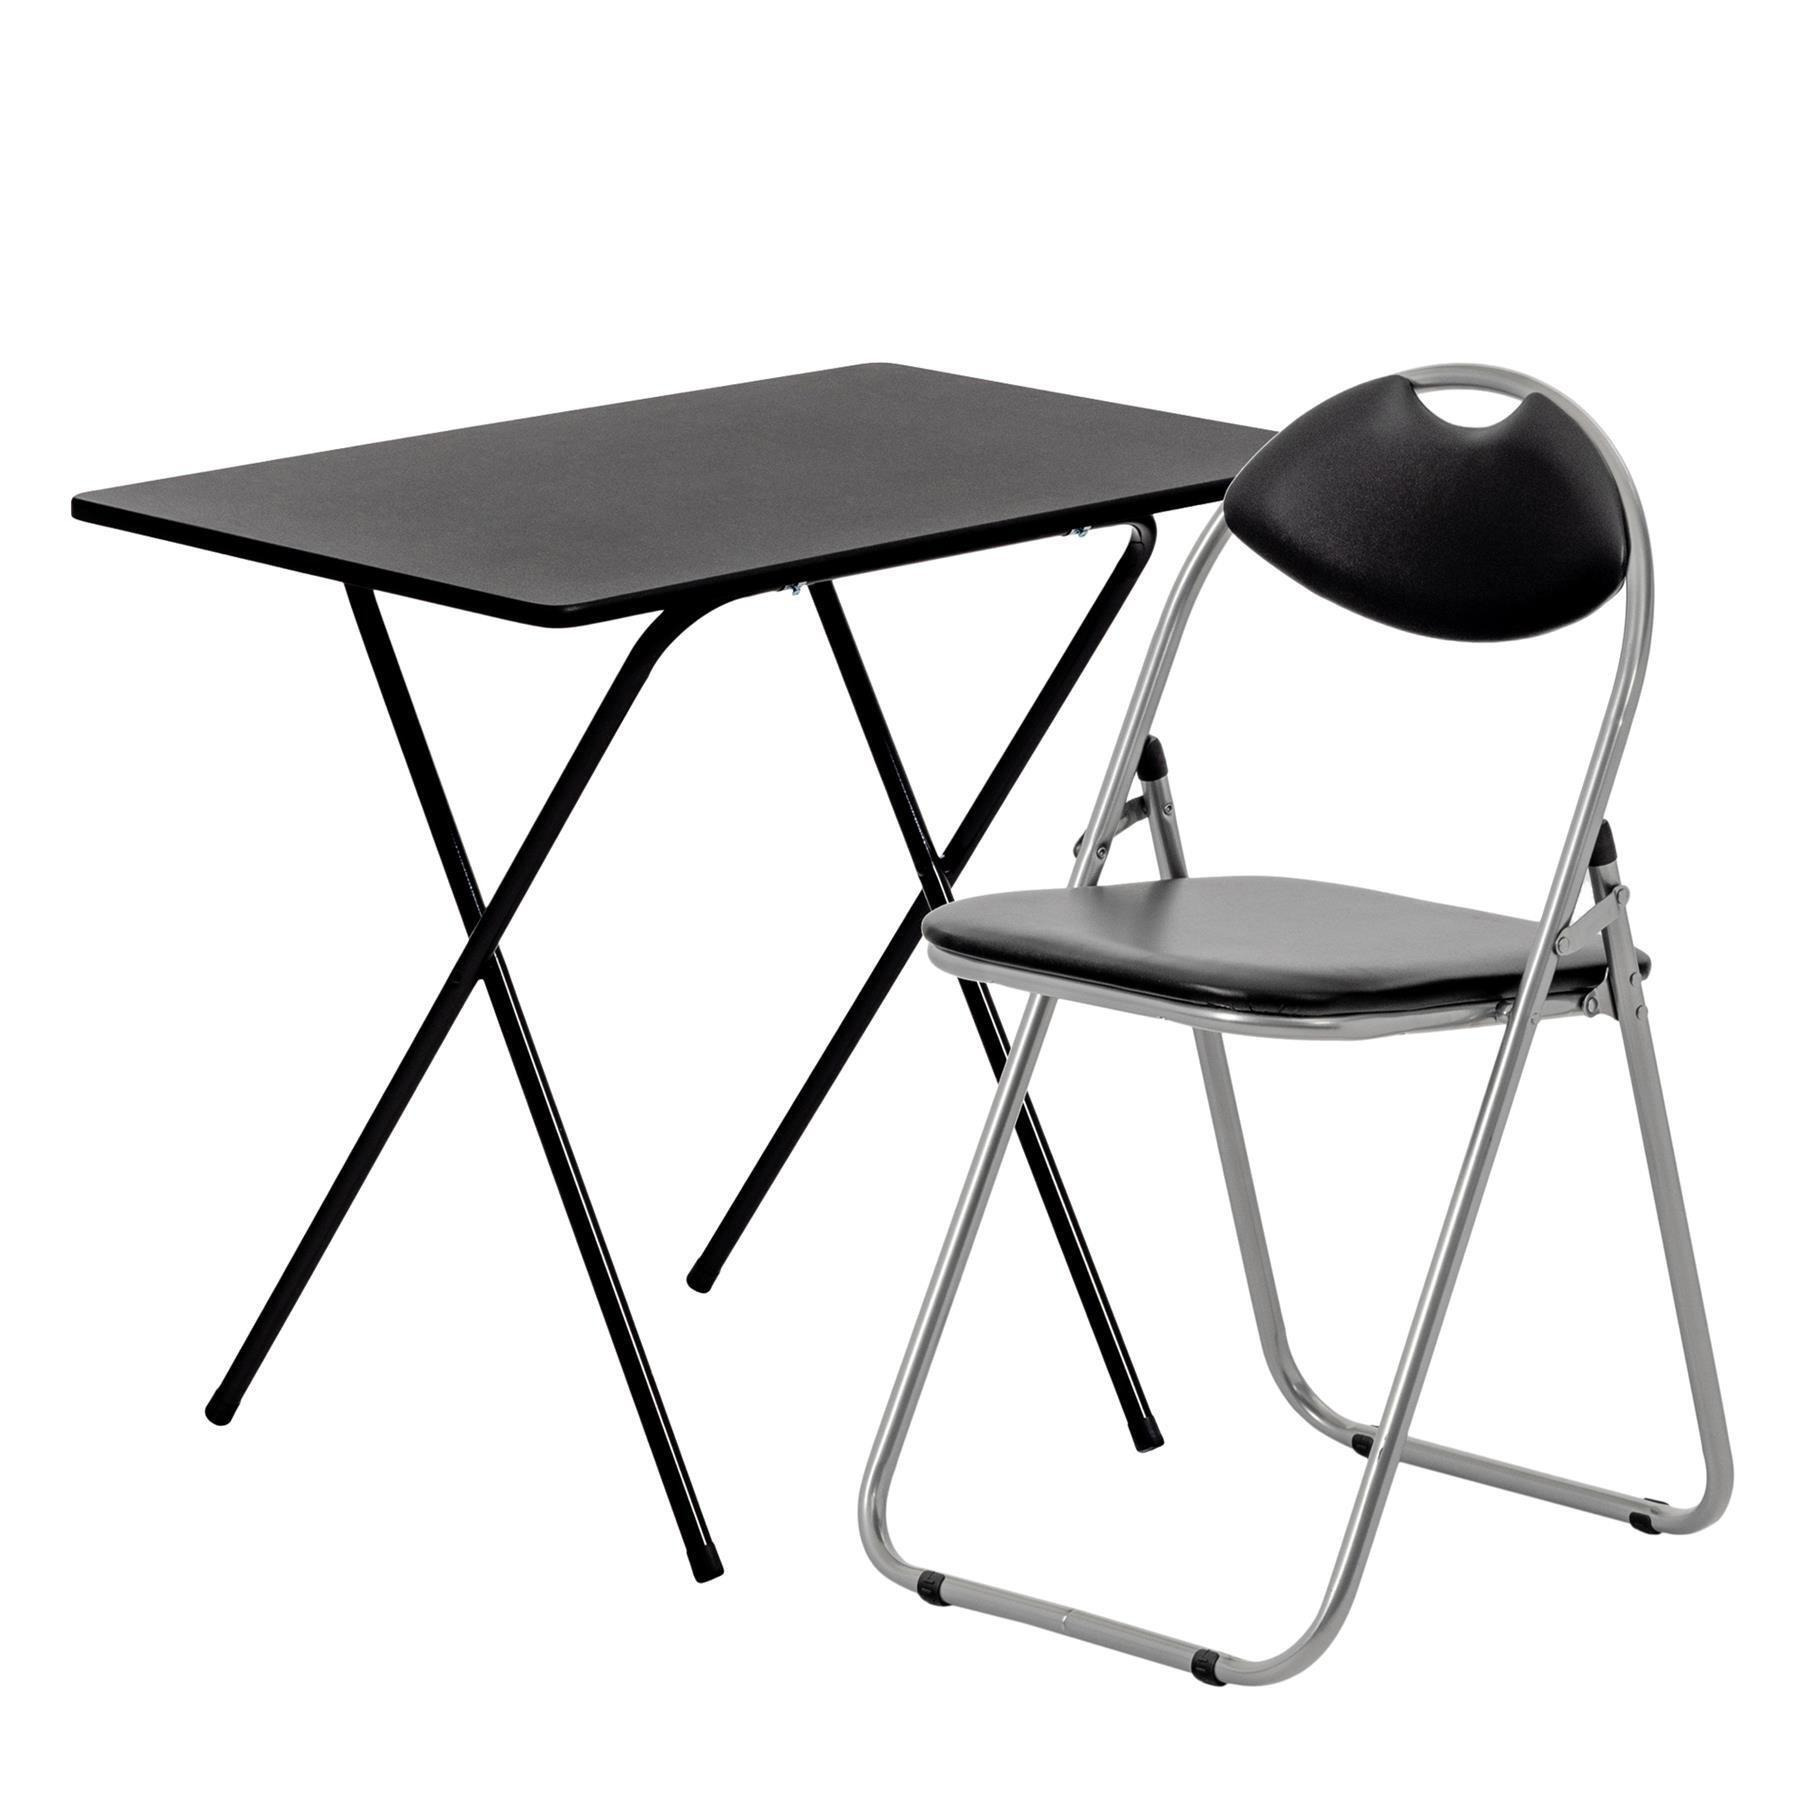 Folding Wooden Desk & Chair Set - image 1